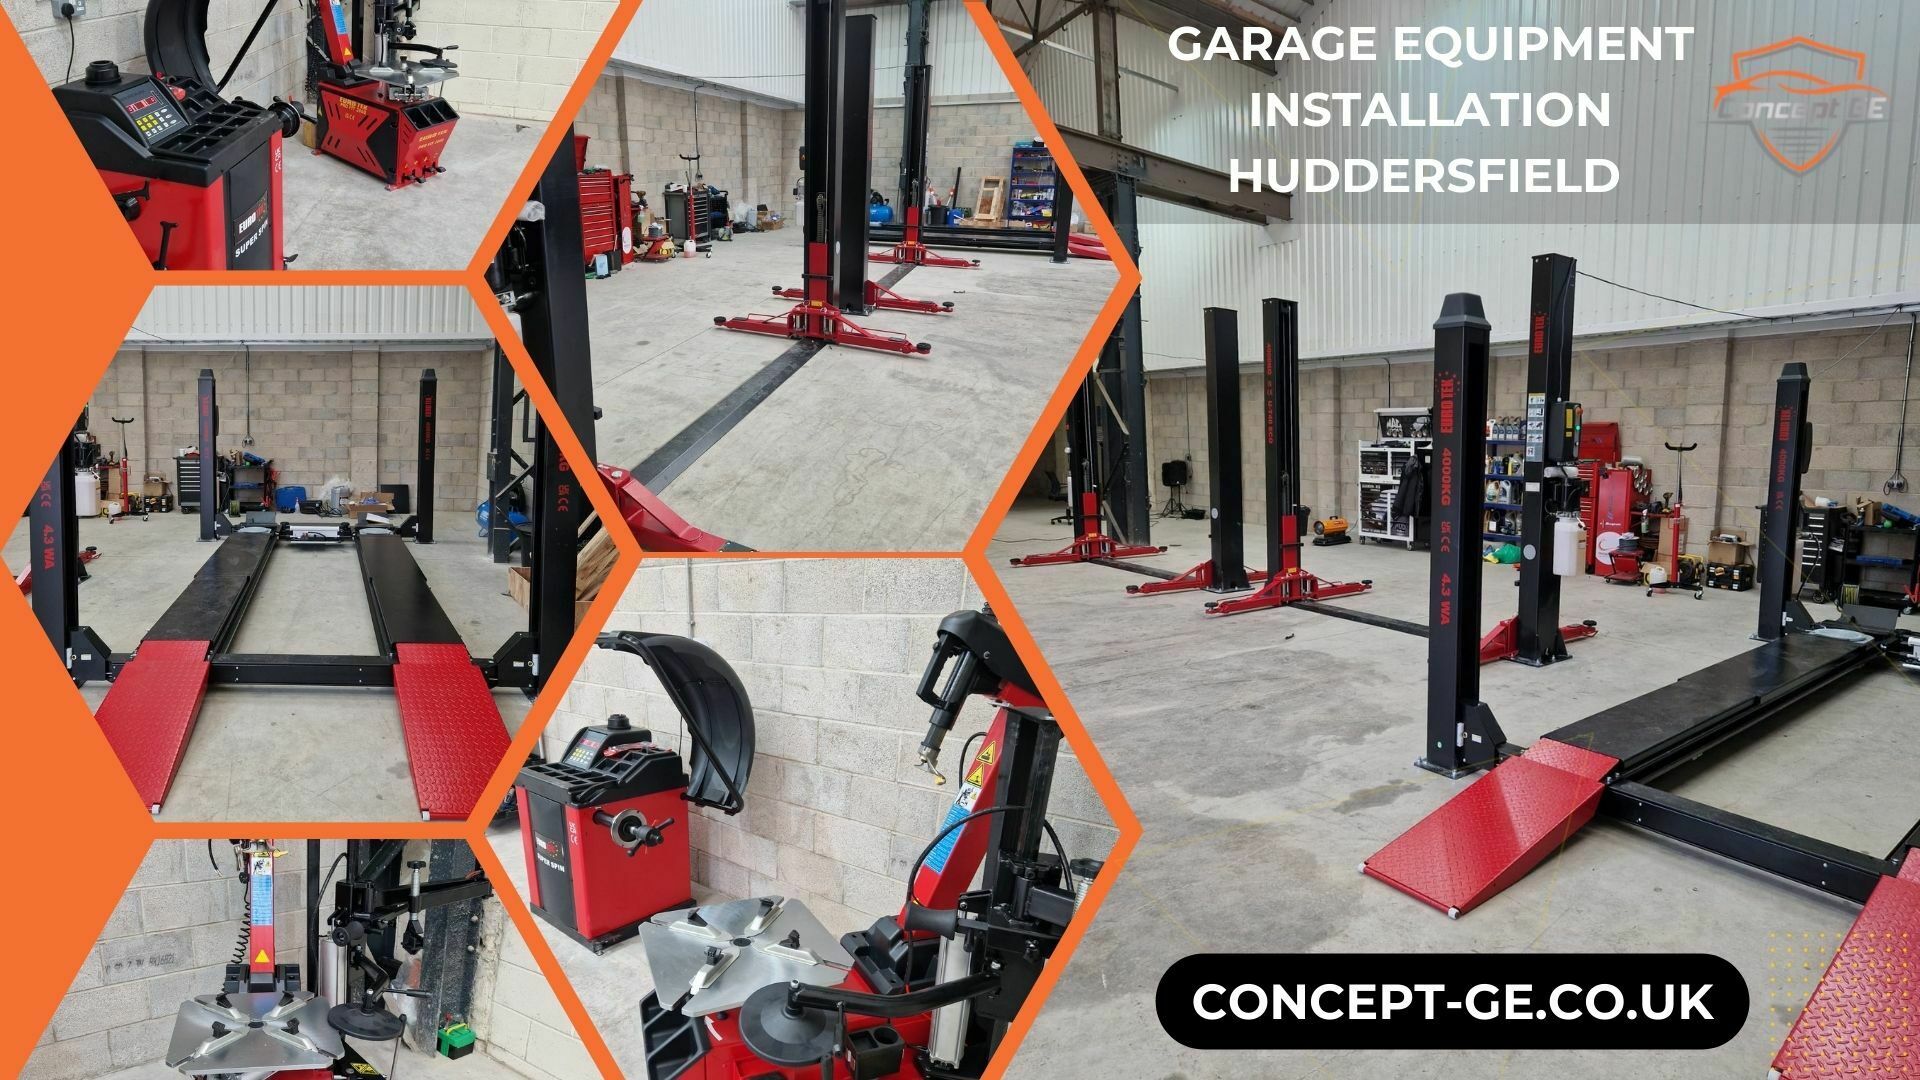 Full Garage Installation for Phoenix RC Autos in Huddersfield in just 7 Days